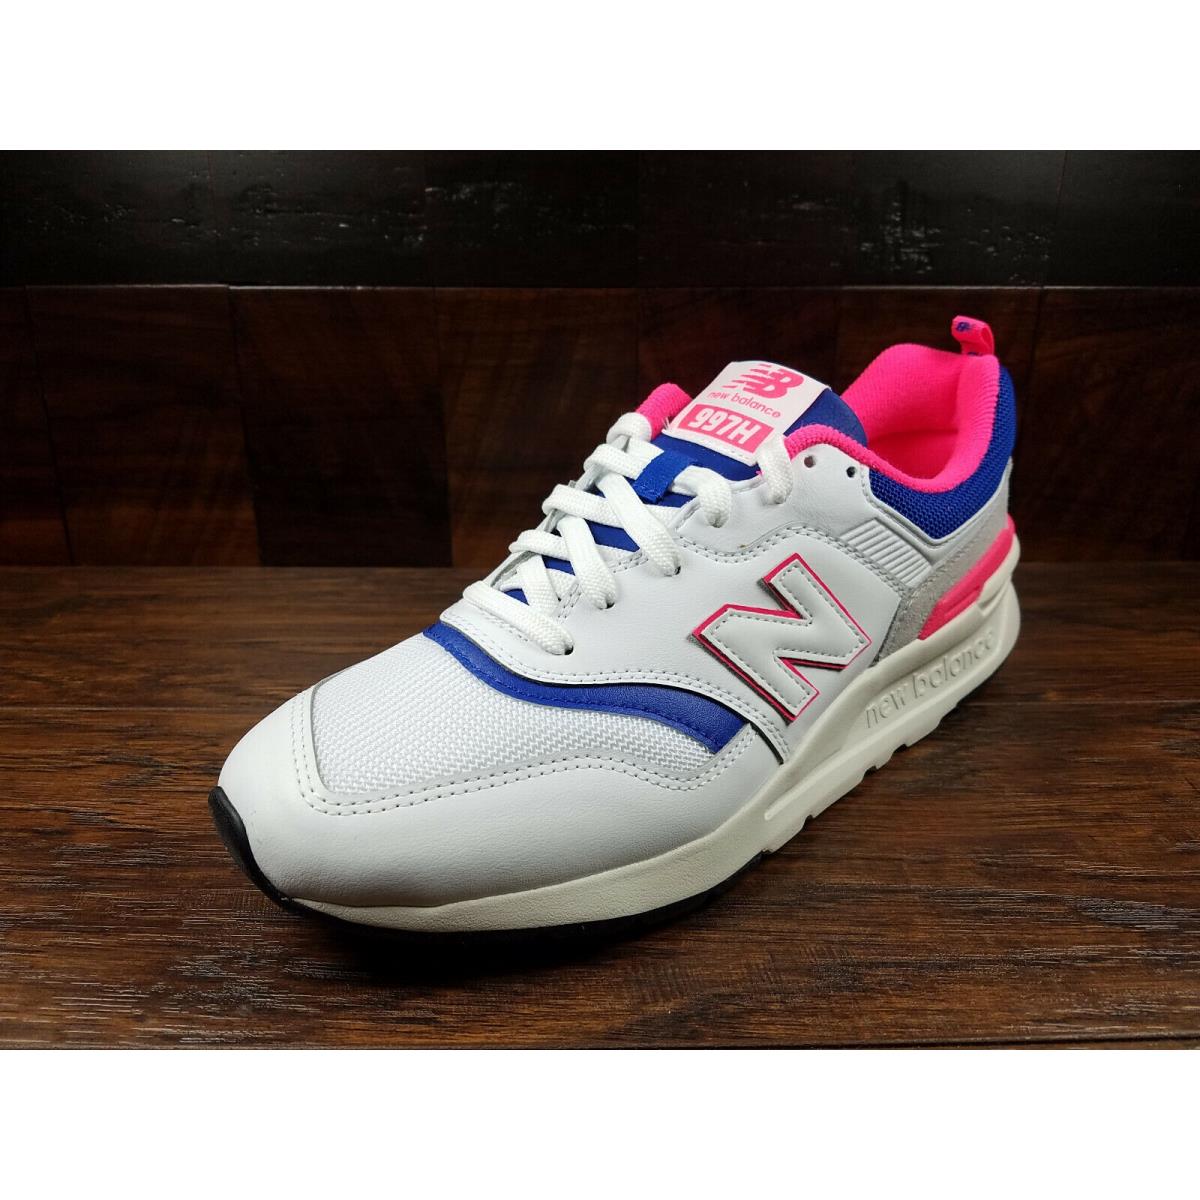 Balance Classic White / Laser Blue / Pink Mens 8-12 | 034358683585 - New Balance shoes - White / Pink / Laser Blue |